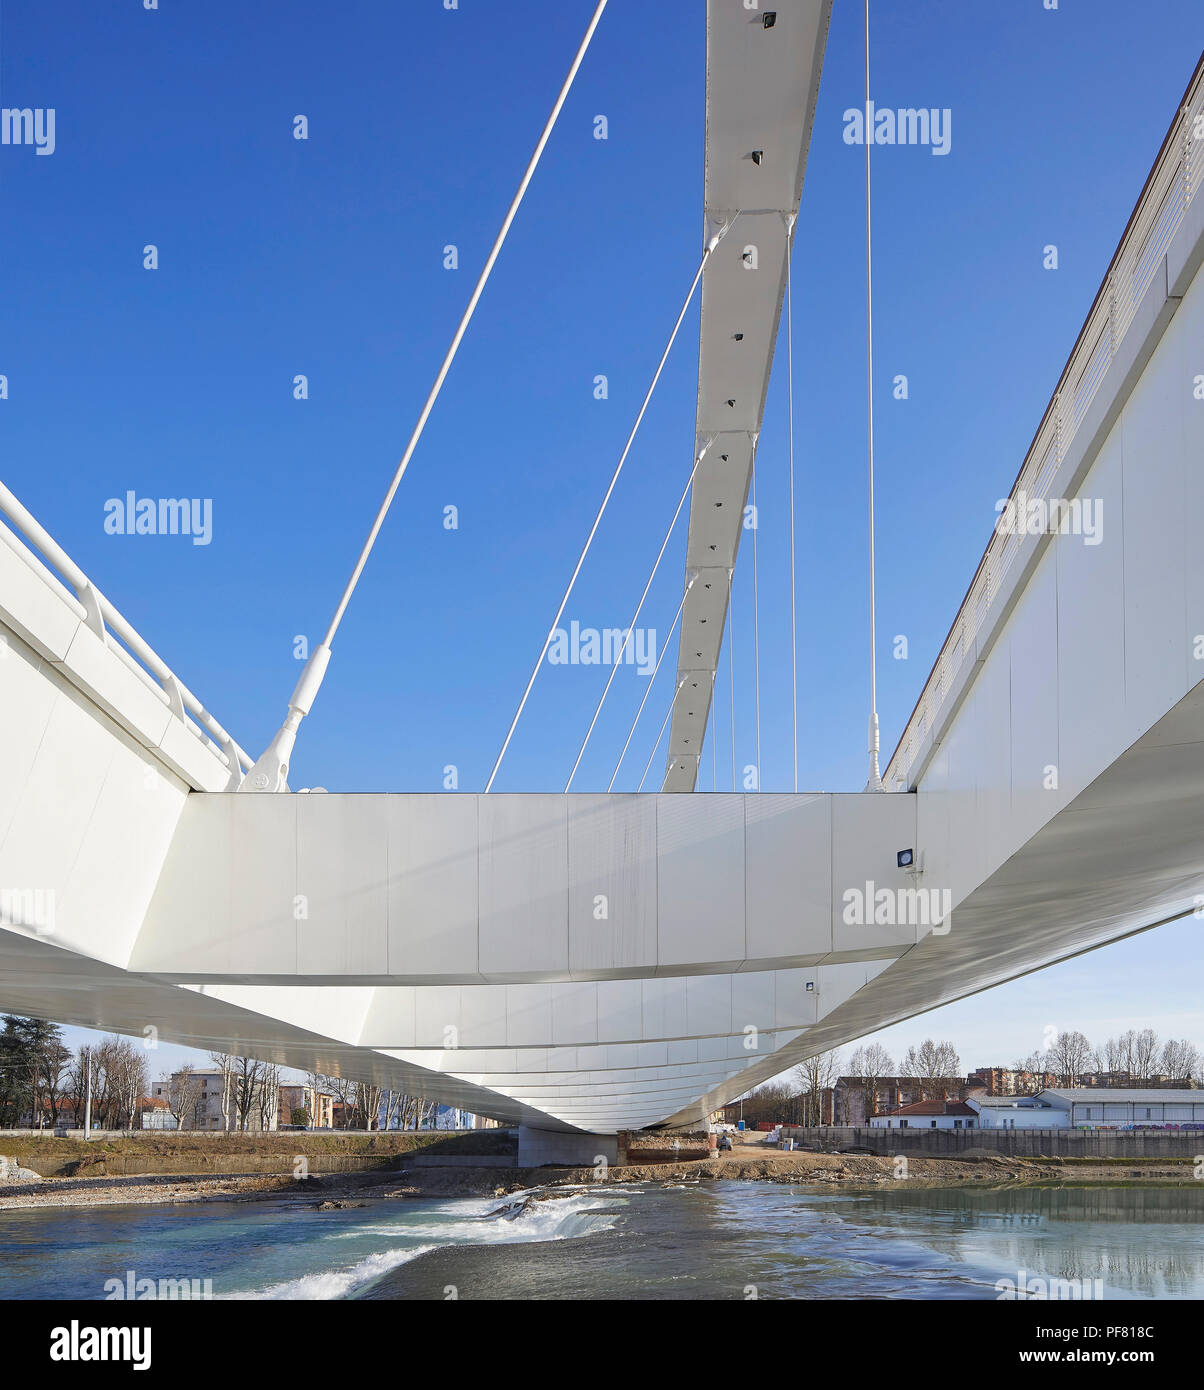 View from underneath the bridge. Cittadella Bridge, Alessandria, Italy. Architect: Richard Meier and Partners, 2017. Stock Photo